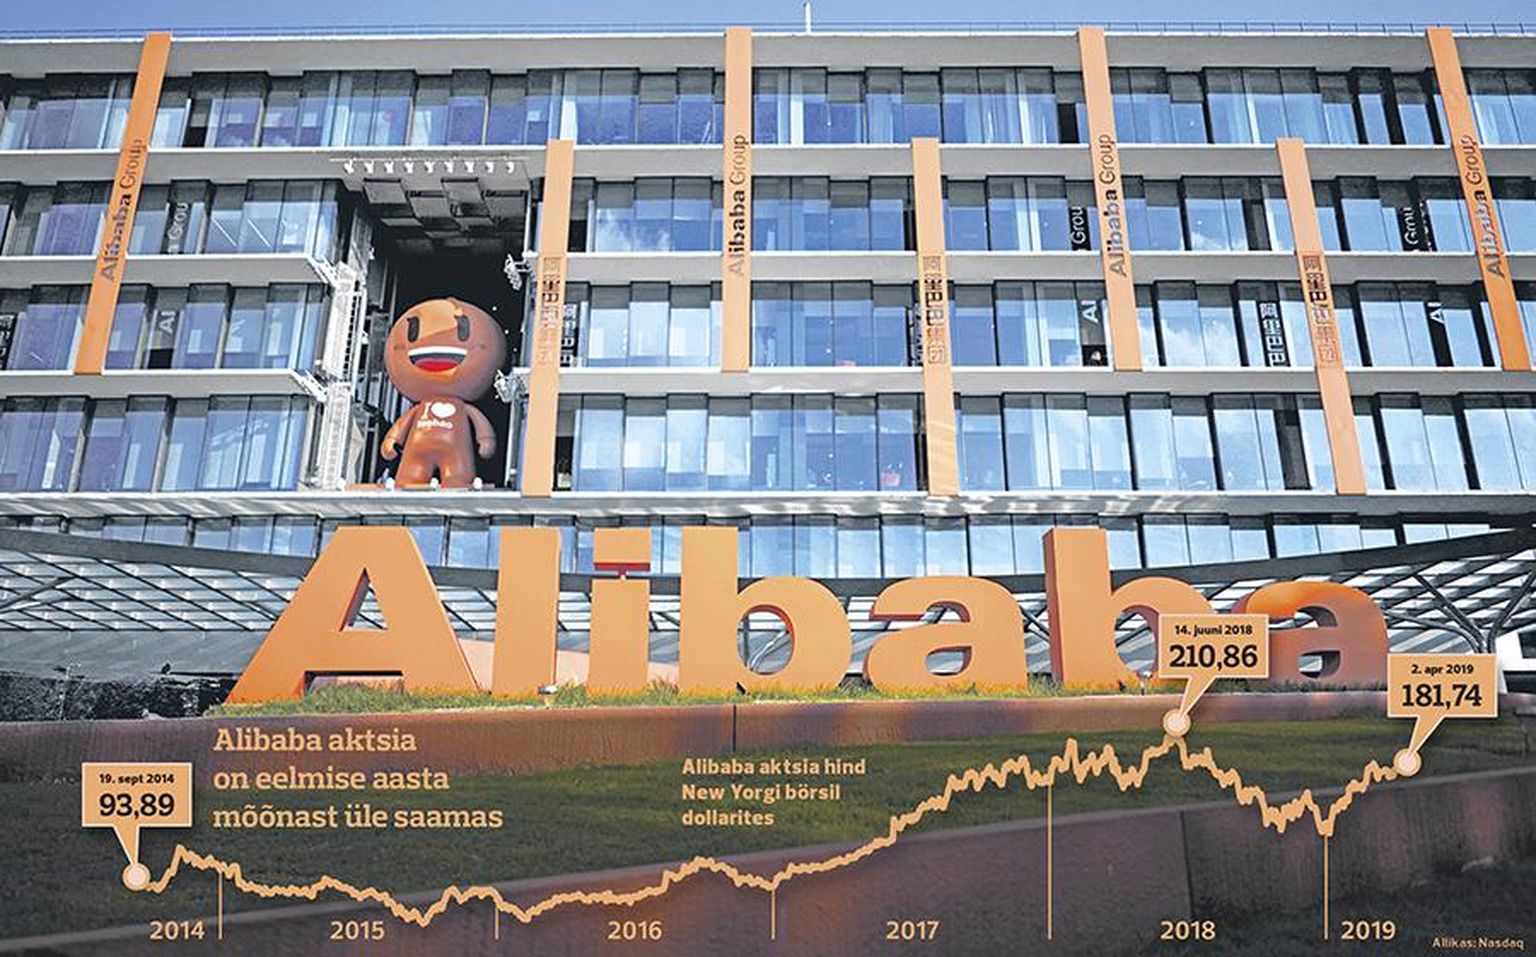 Alibaba aktsia hind New Yorgi börsil.